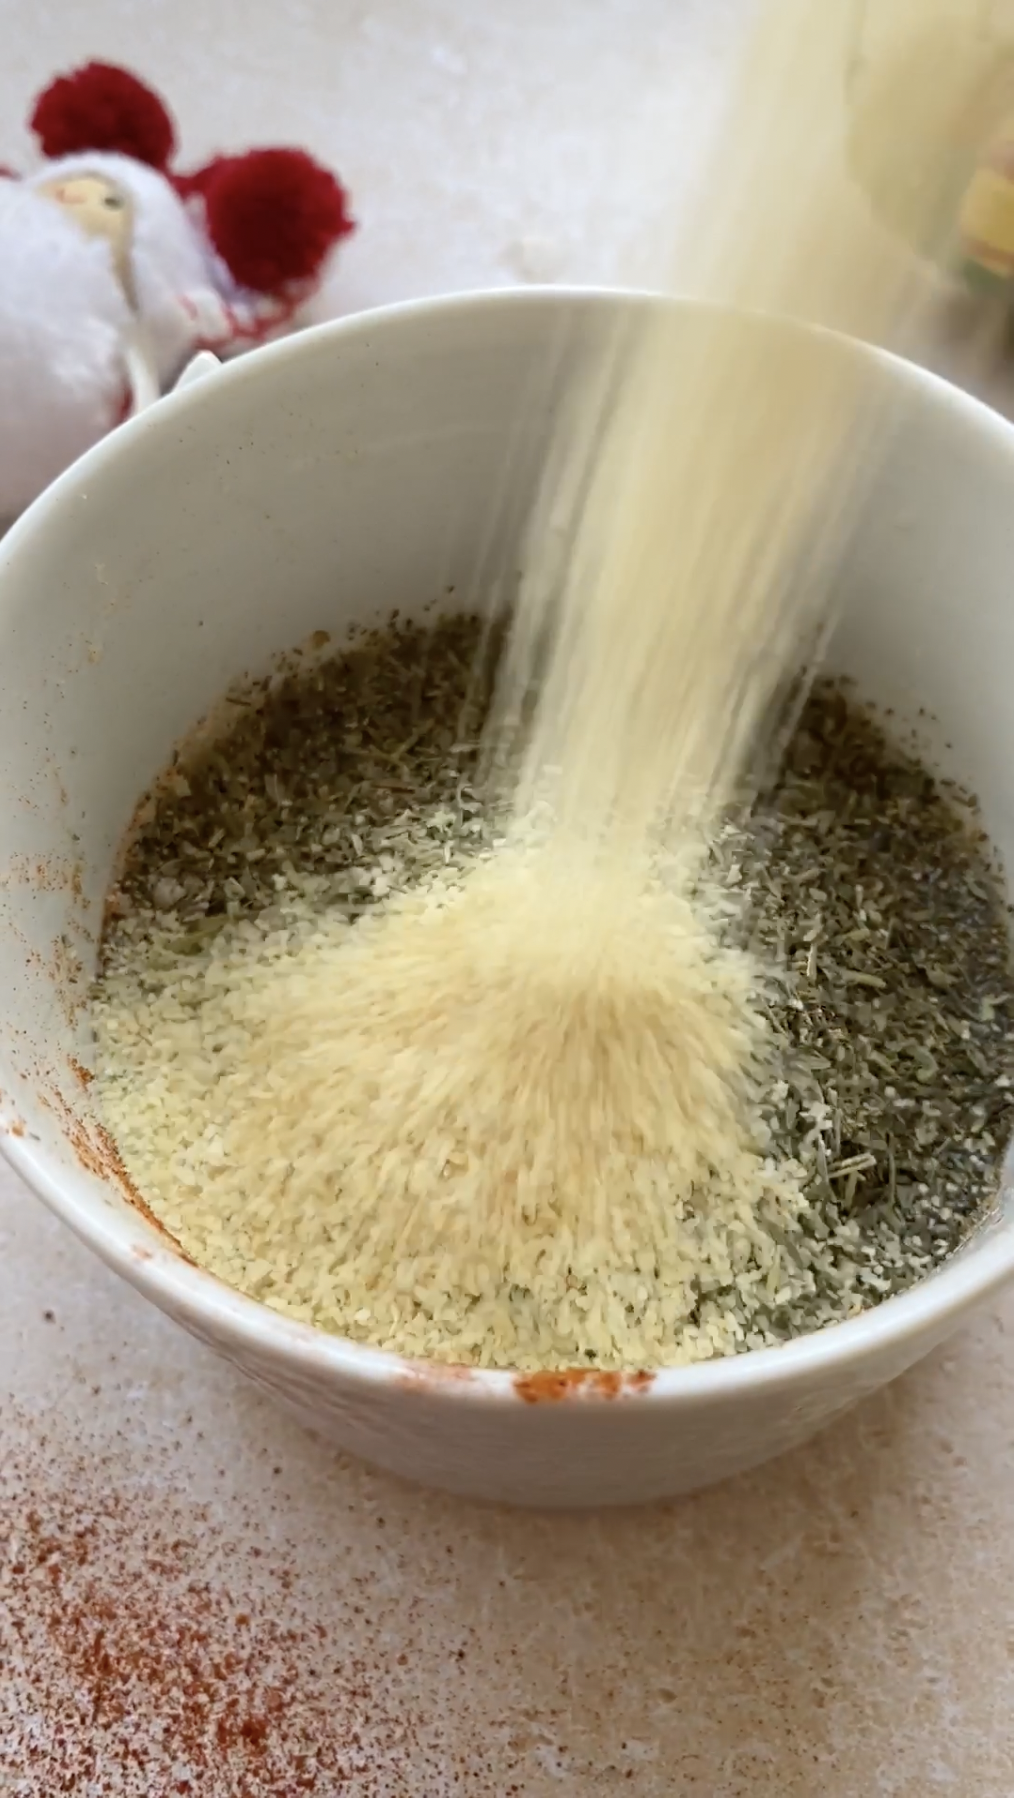 Garlic powder added to the mixture.